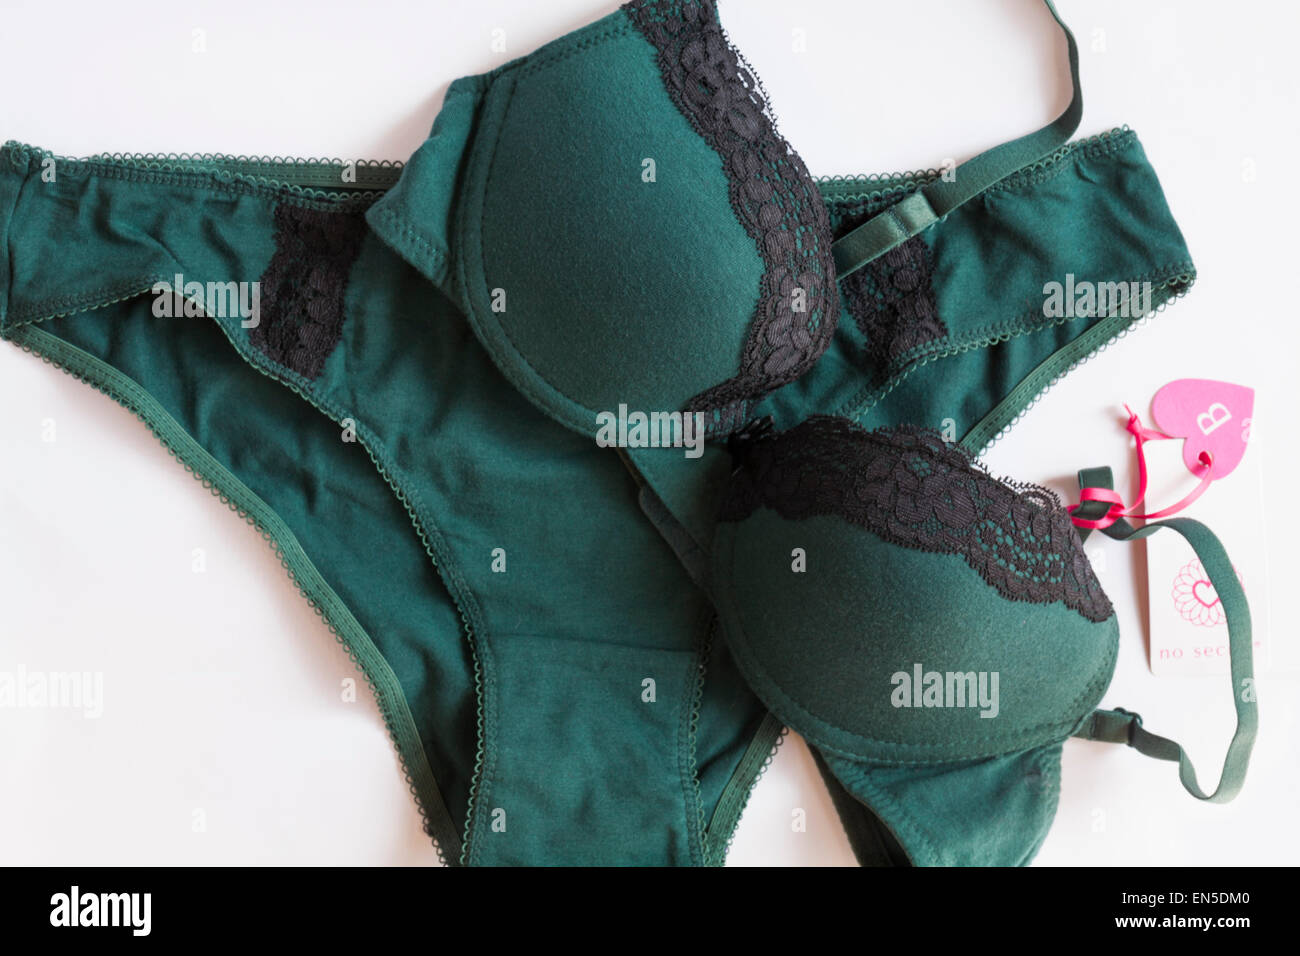 https://c8.alamy.com/comp/EN5DM0/matching-no-secret-dark-green-with-black-lace-edged-underwear-set-EN5DM0.jpg